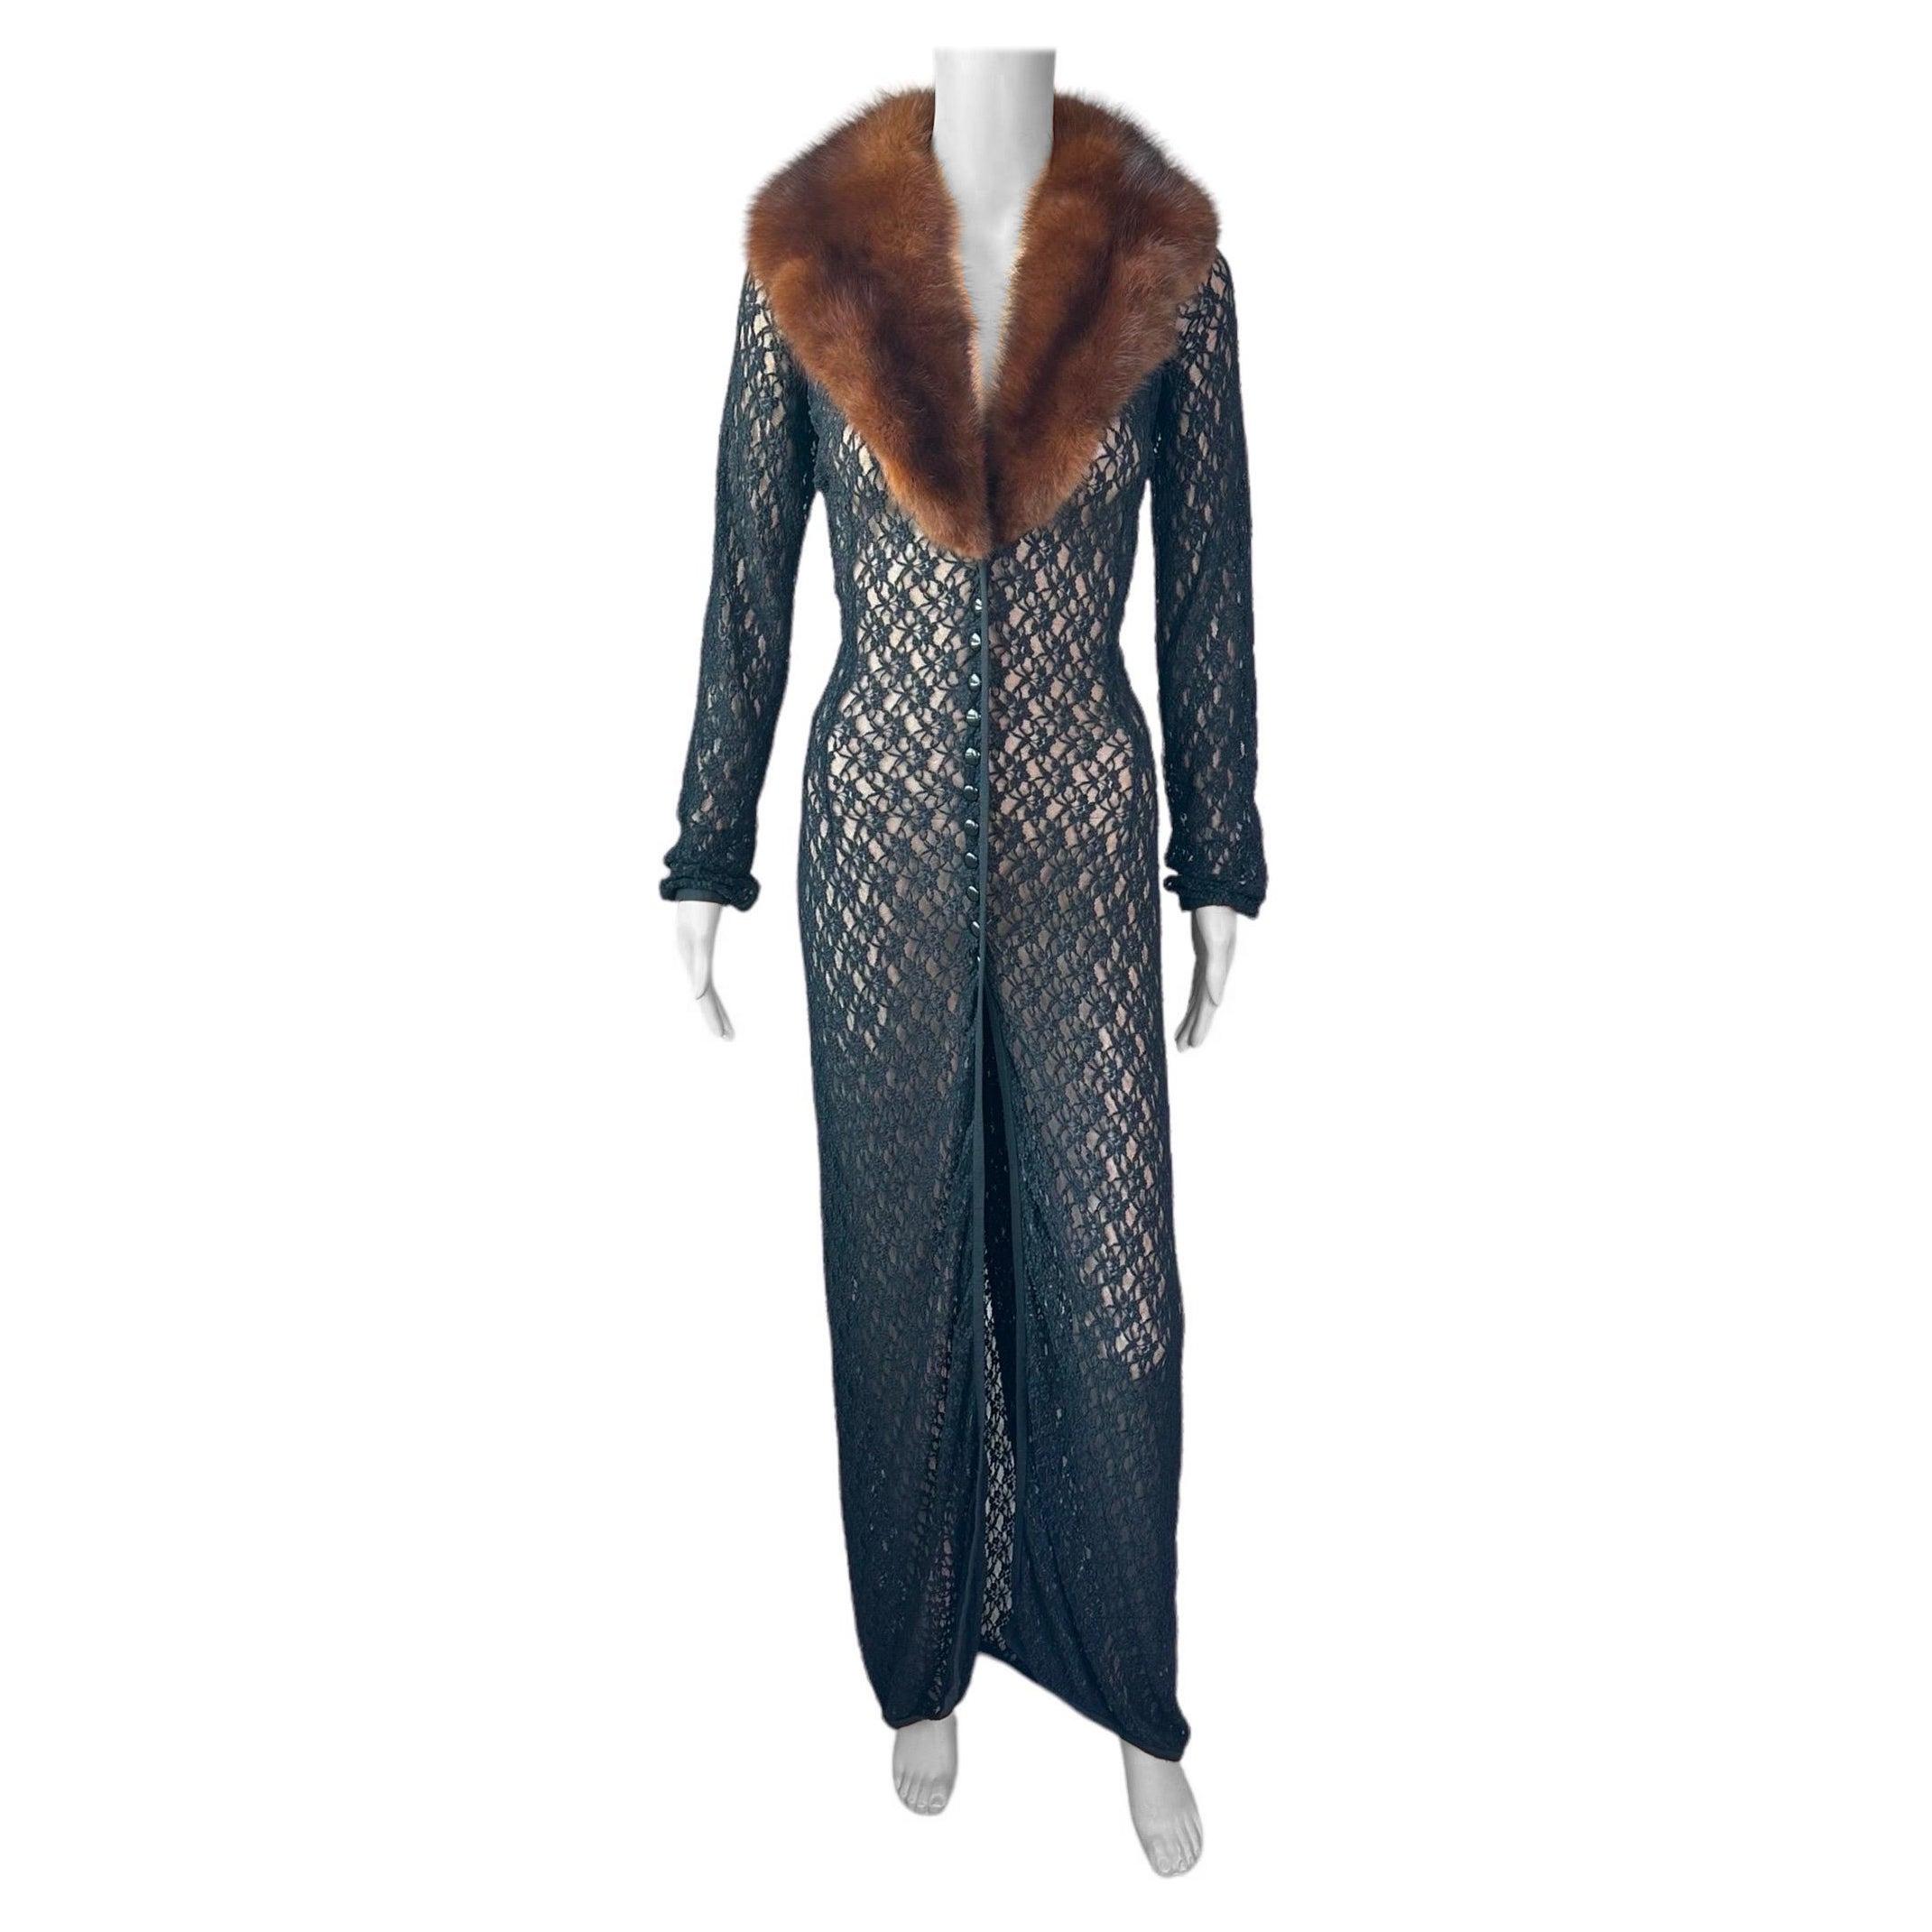 Dolce & Gabbana S/S 1997 Sable Fur Collar Sheer Knit Black Cardigan Coat Dress For Sale